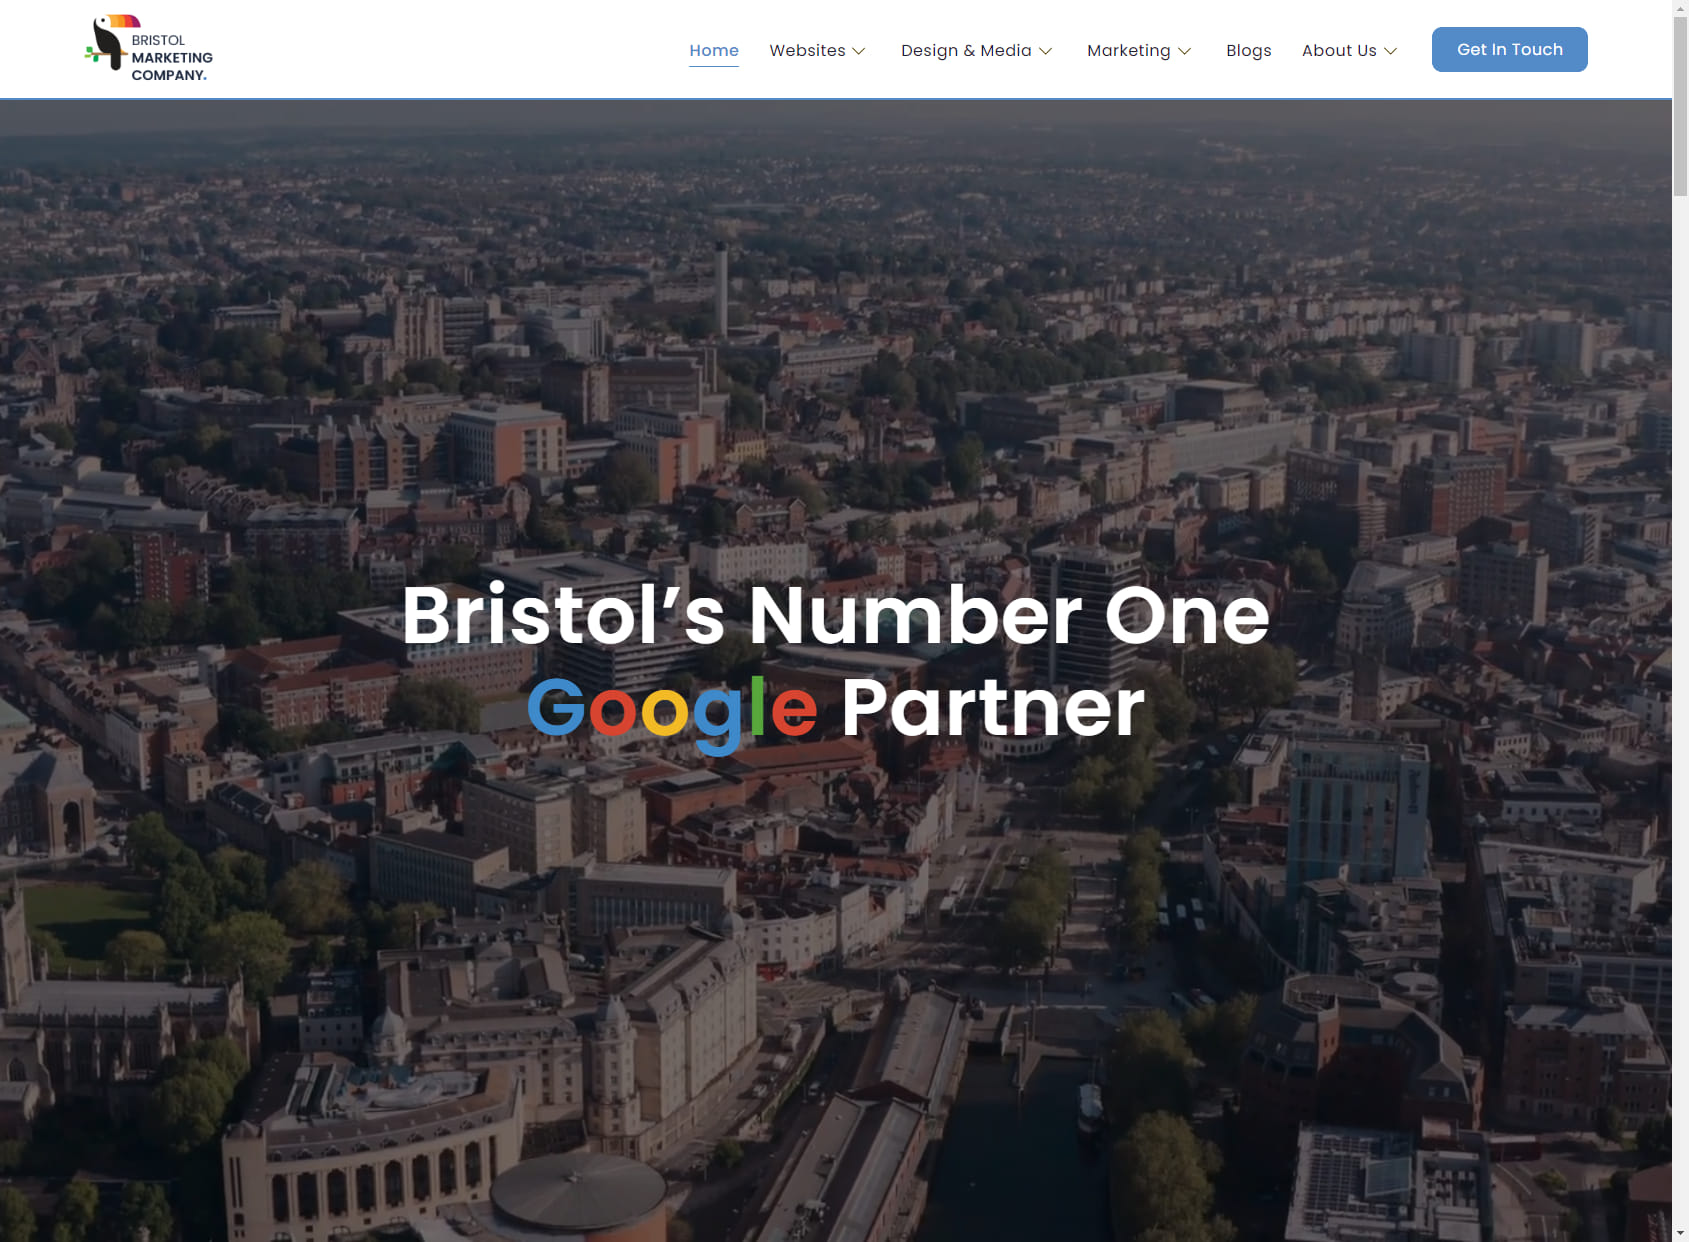 Bristol Marketing Company - Marketing, Web Design & SEO Agency Bristol